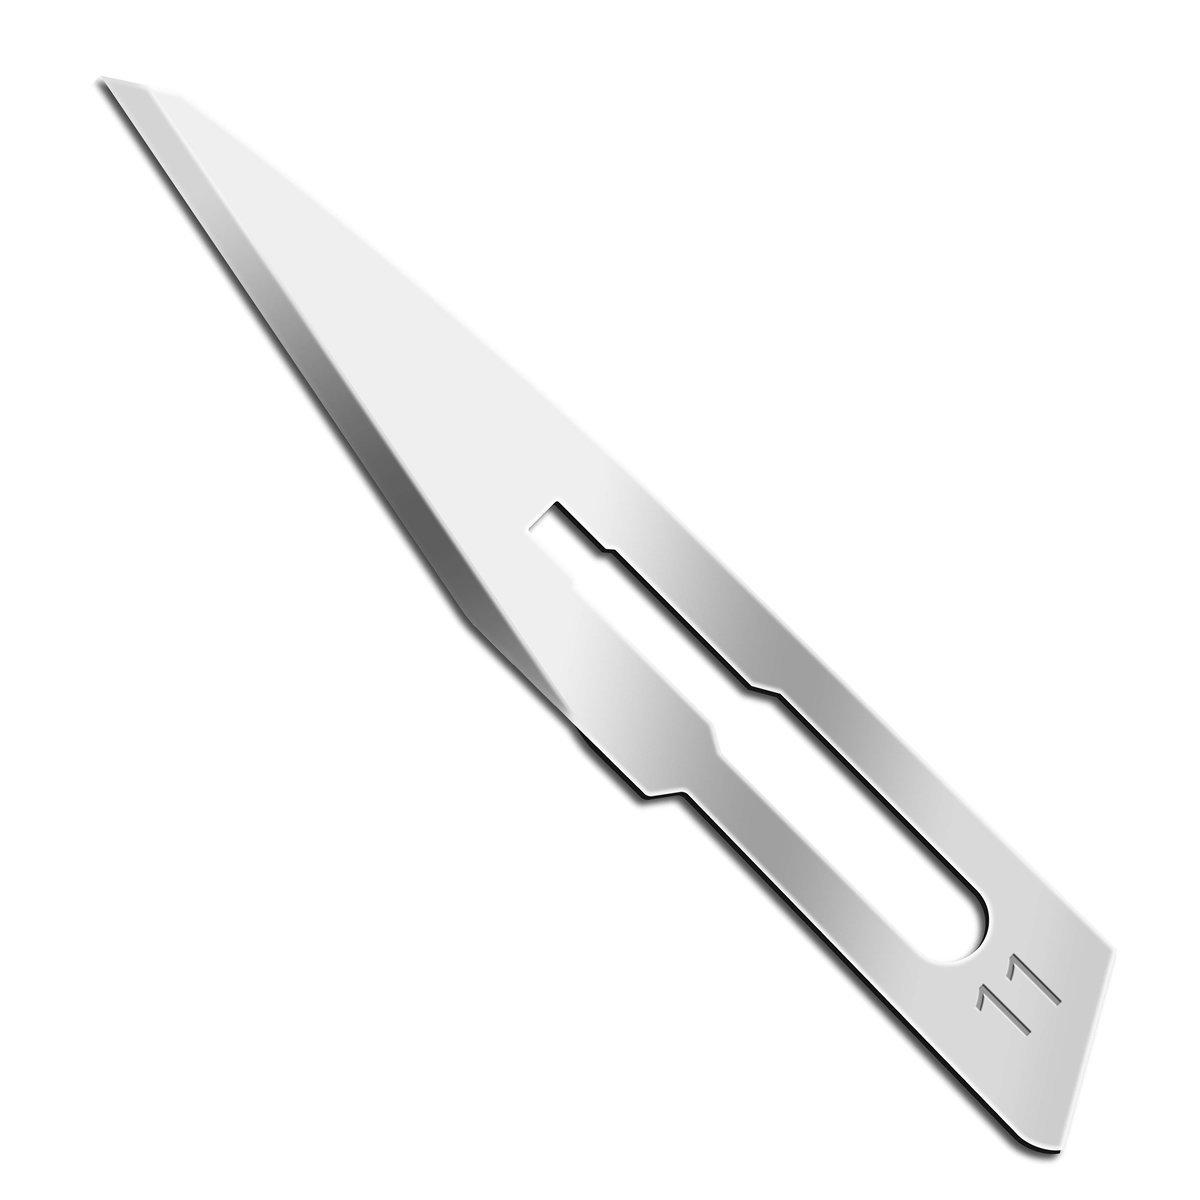 Surgical Scalpel Blades - No. 11, Pkg. of 10